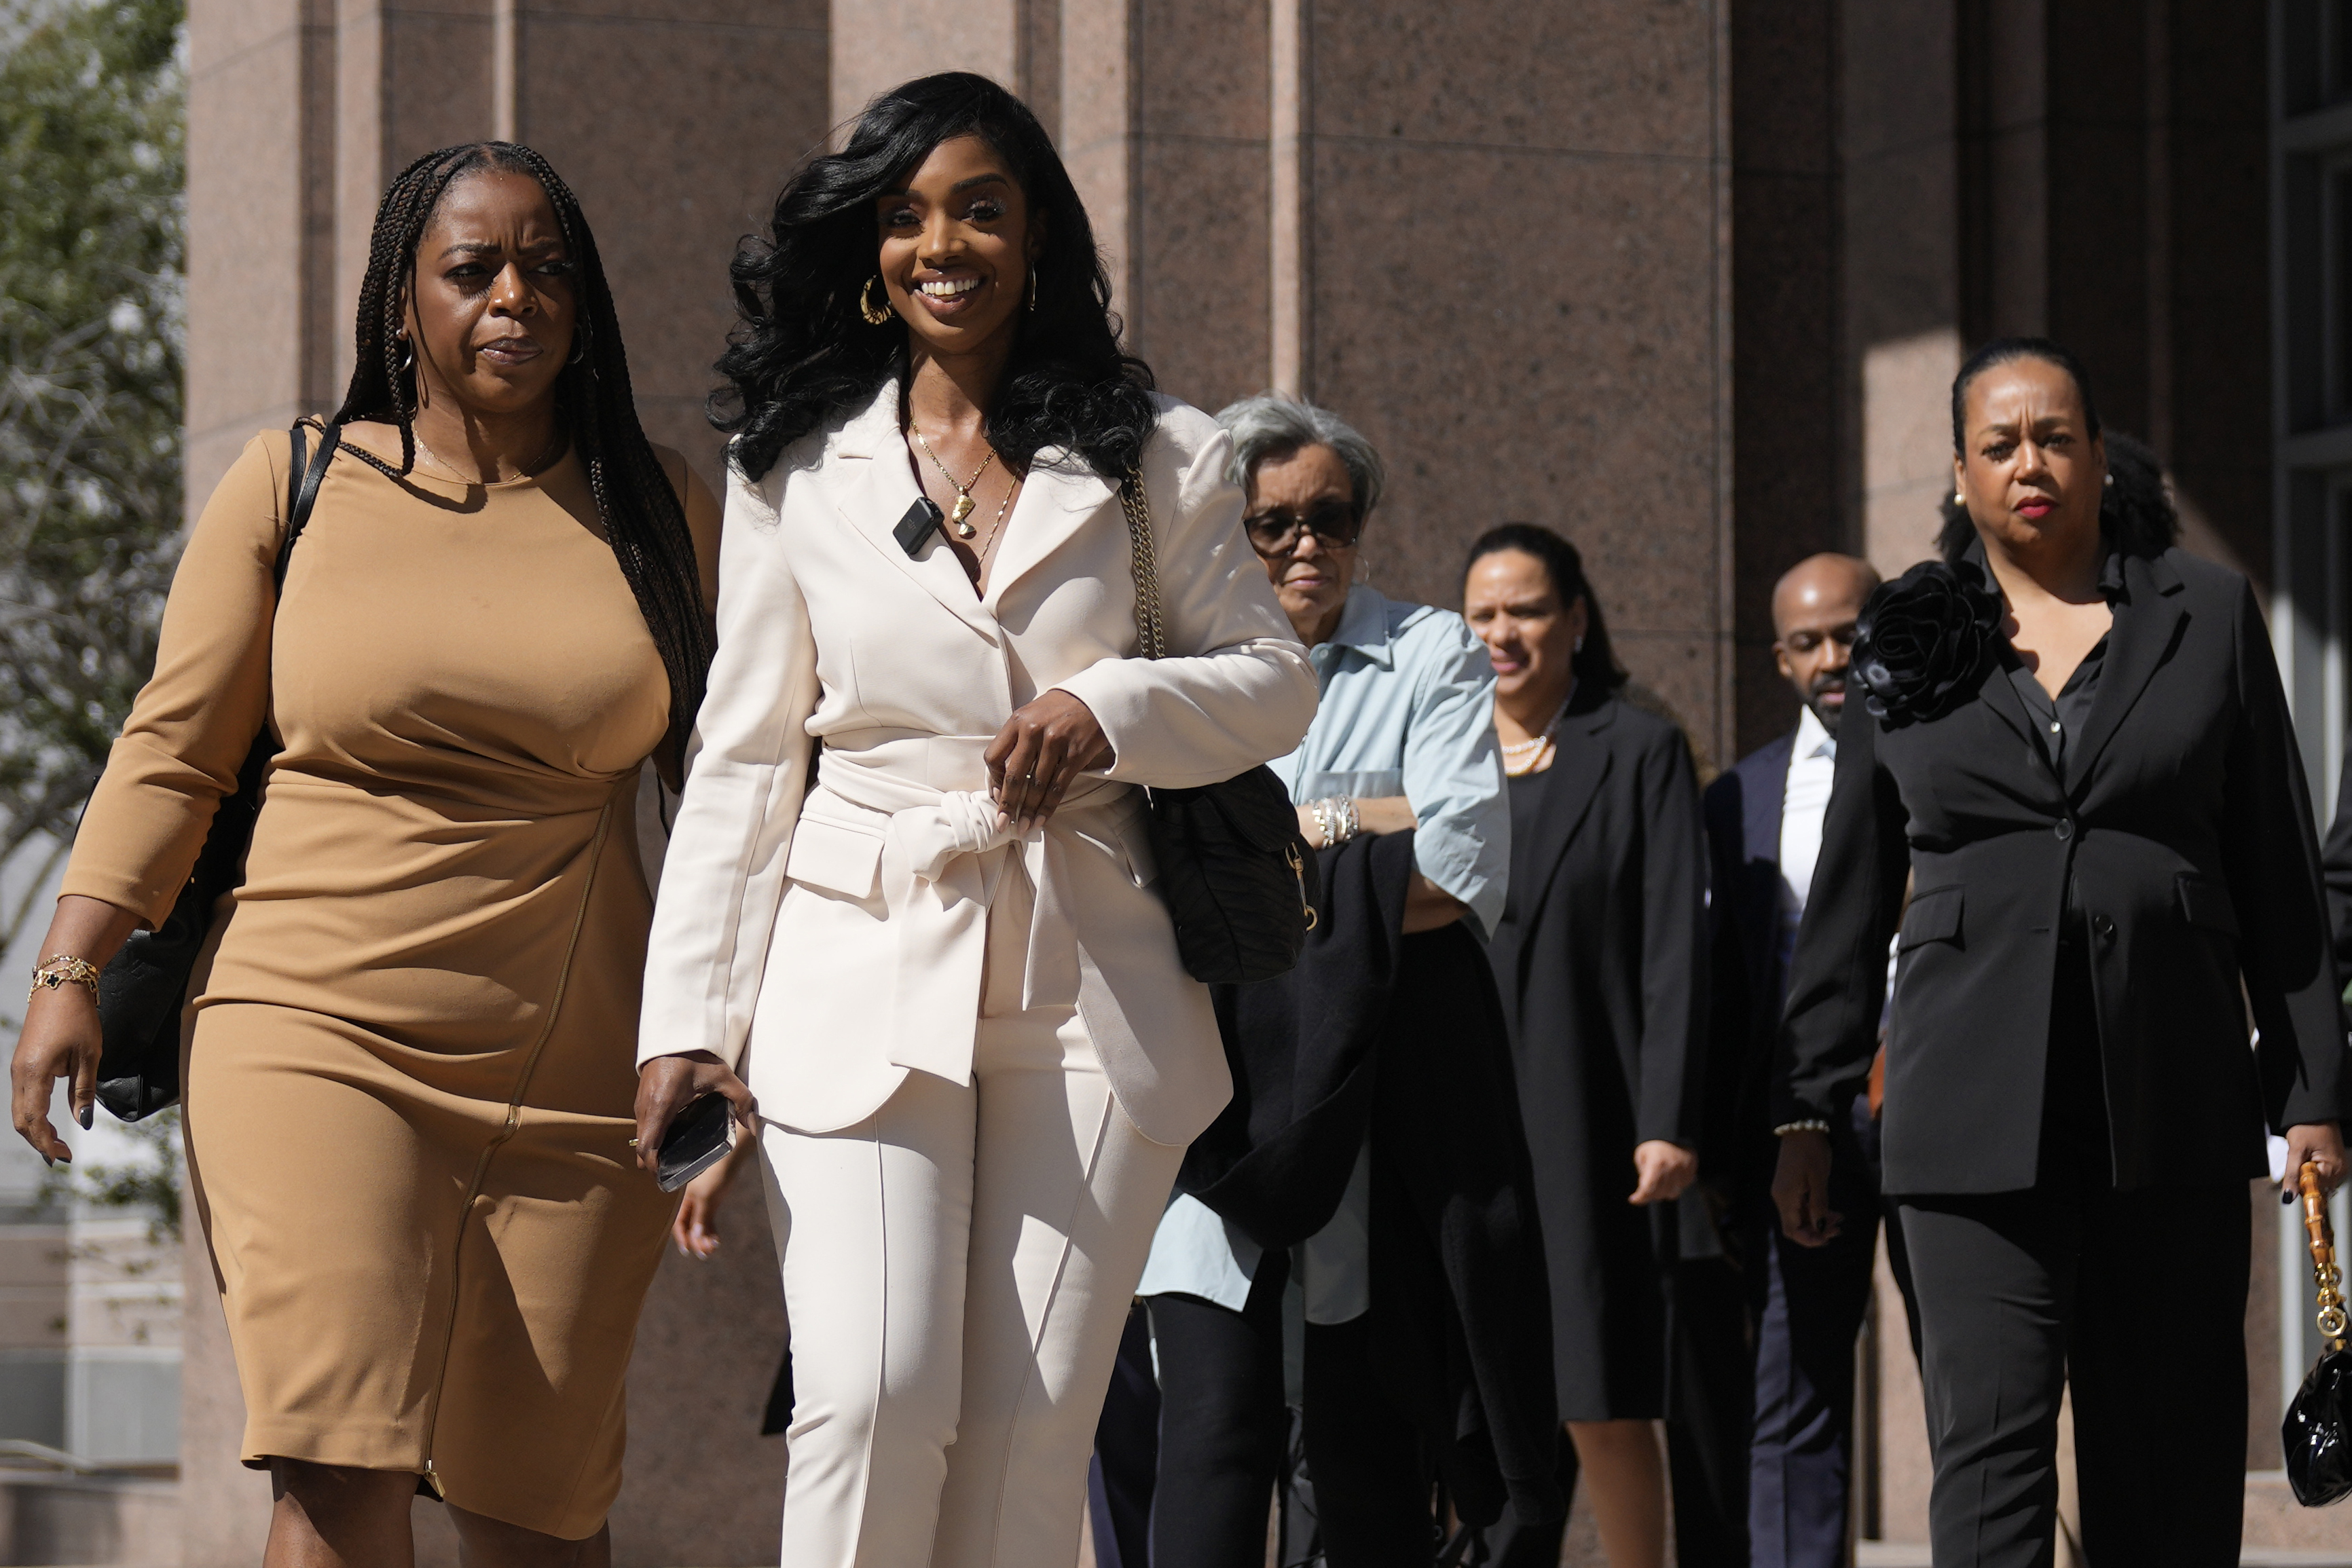 Grant program for Black women faces tough questioning in anti-DEI lawsuit